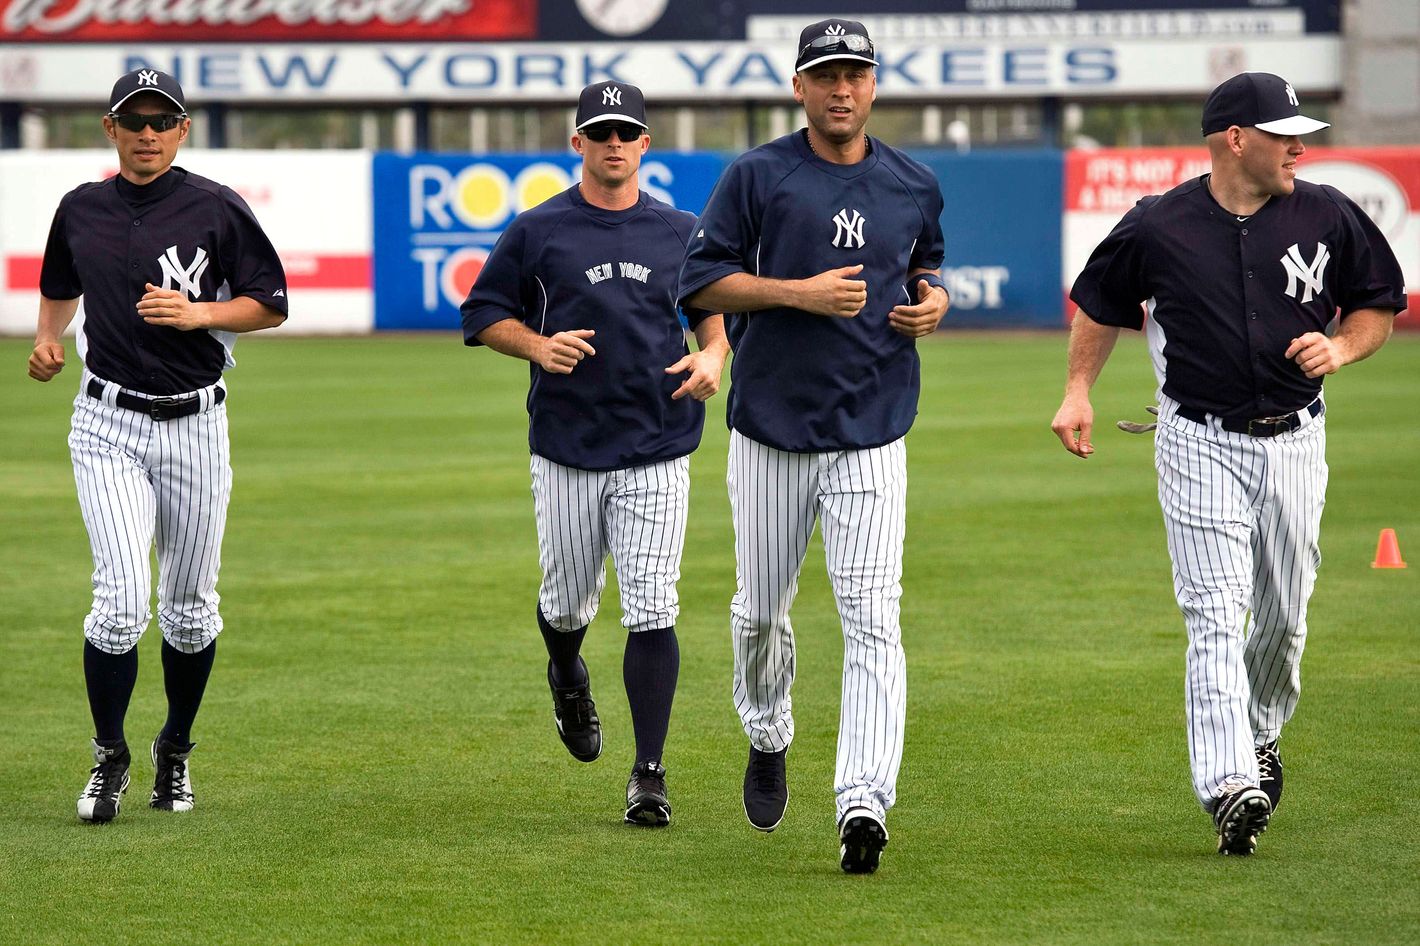 New York Yankees game used Spring Training Jersey